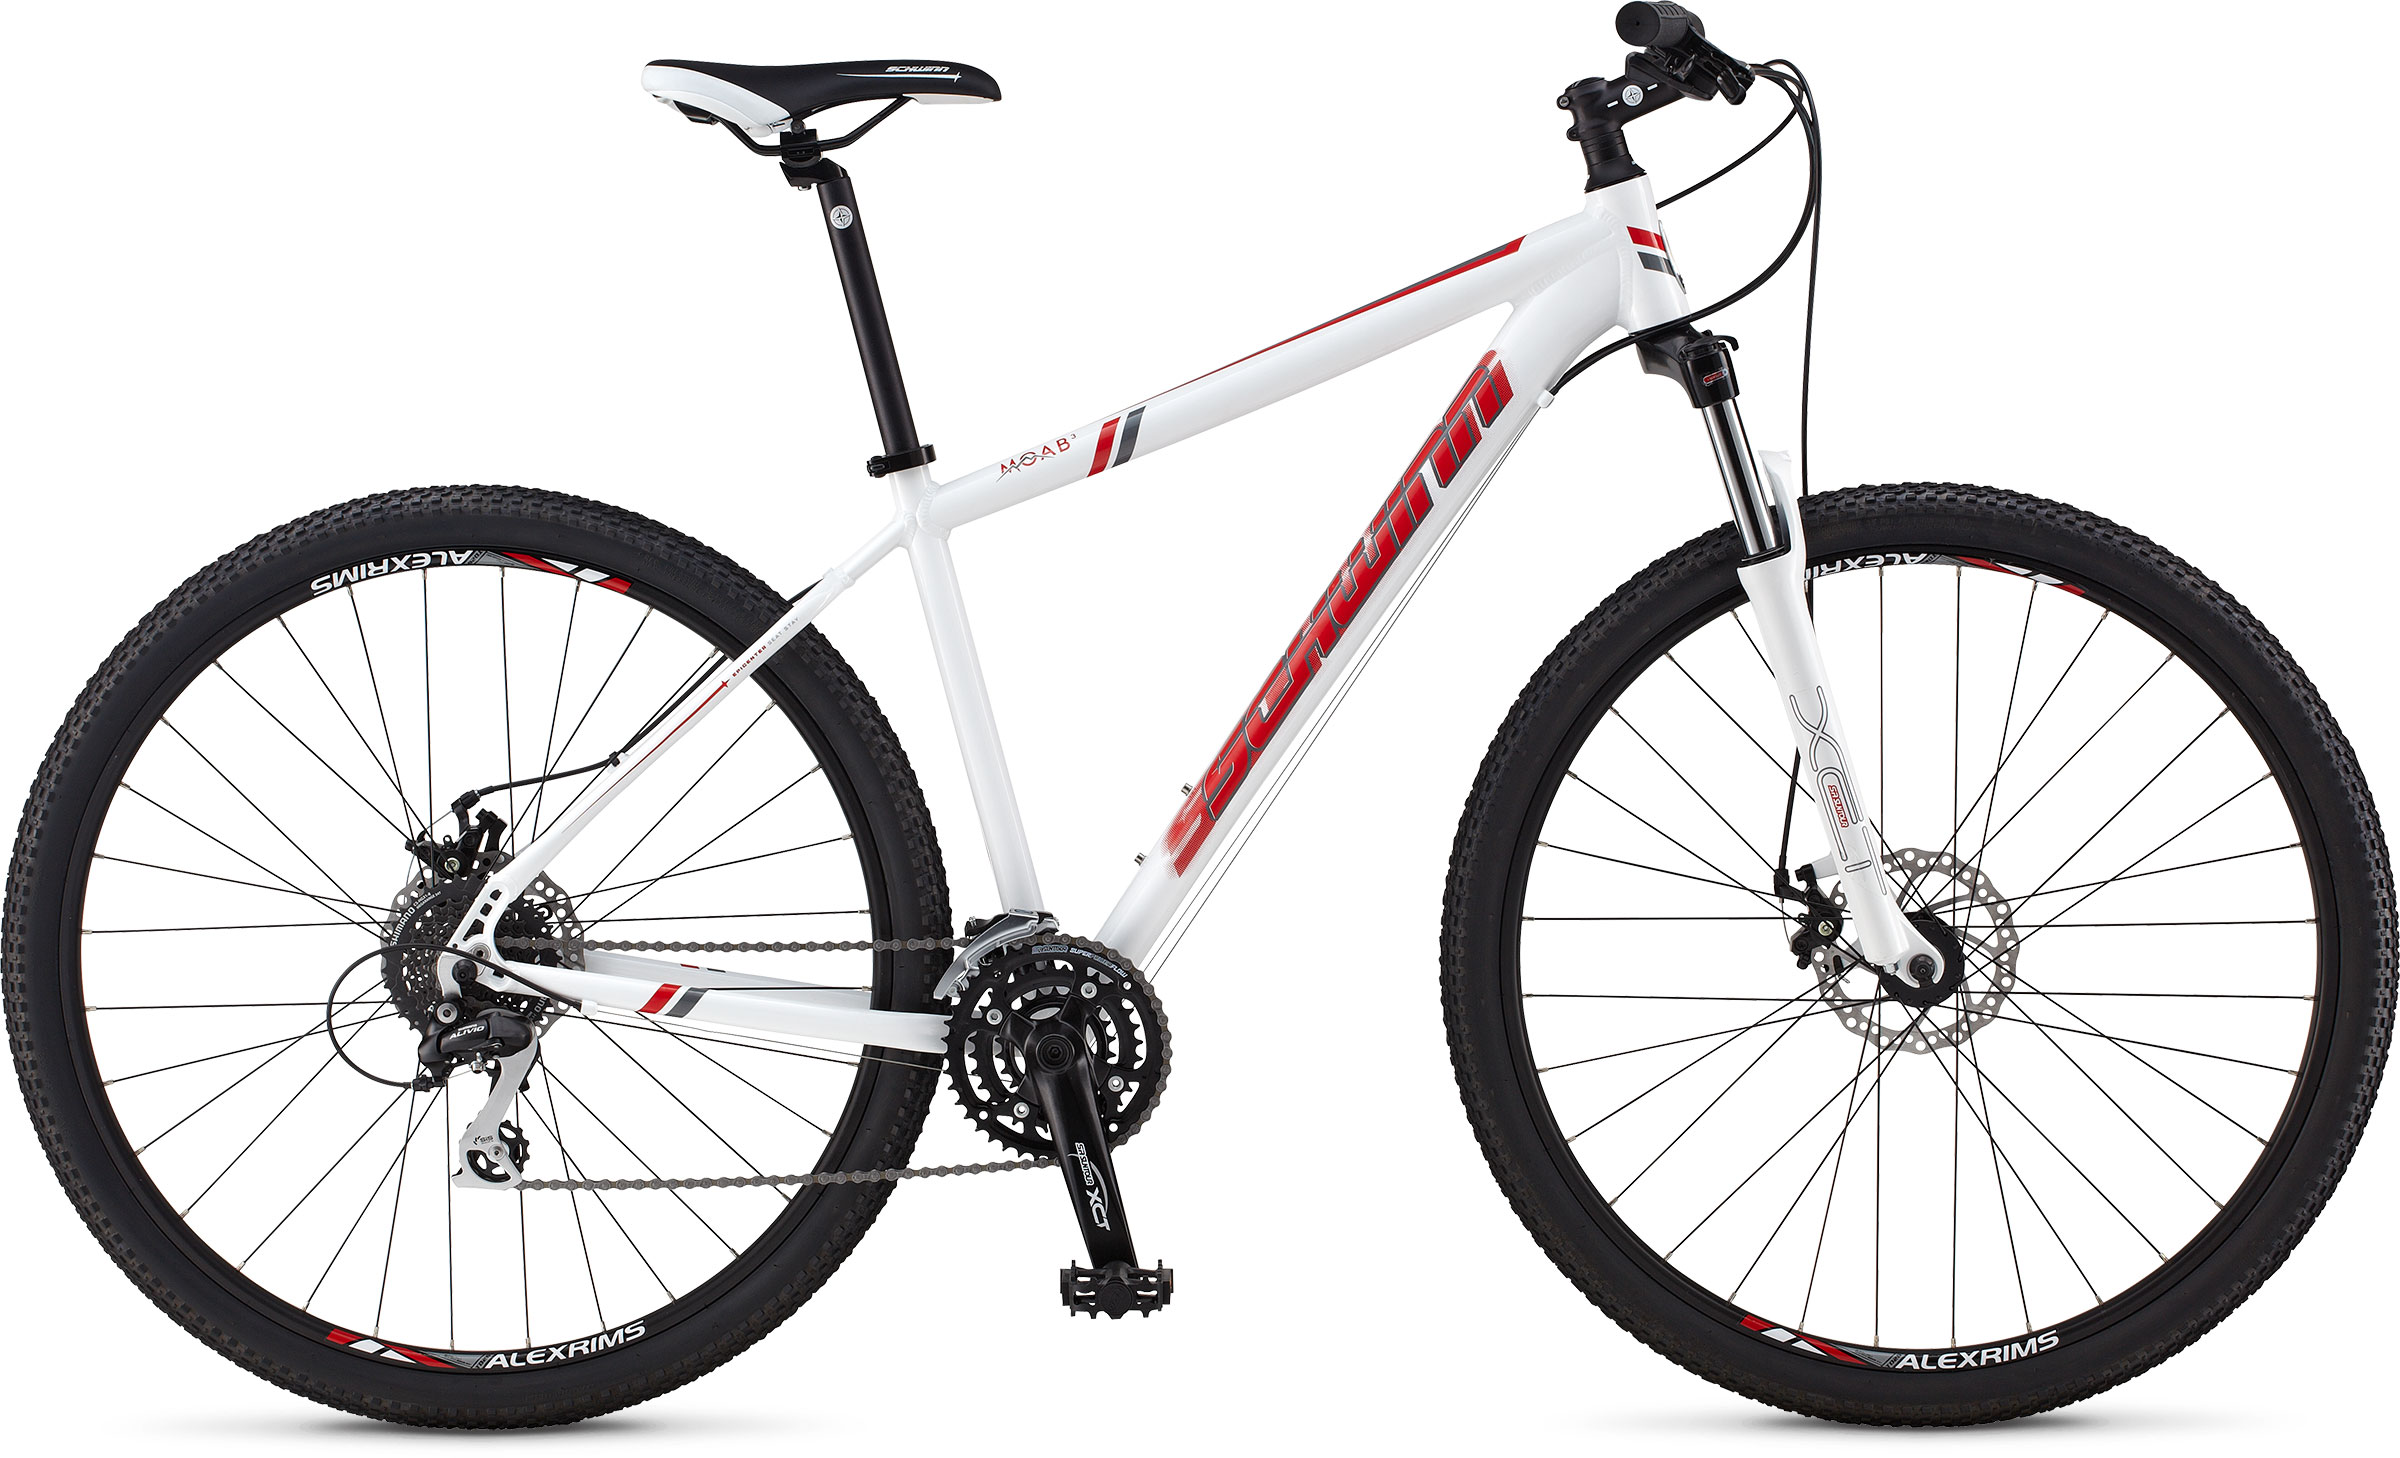 2015 Schwinn Moab 3 - Bicycle Details 